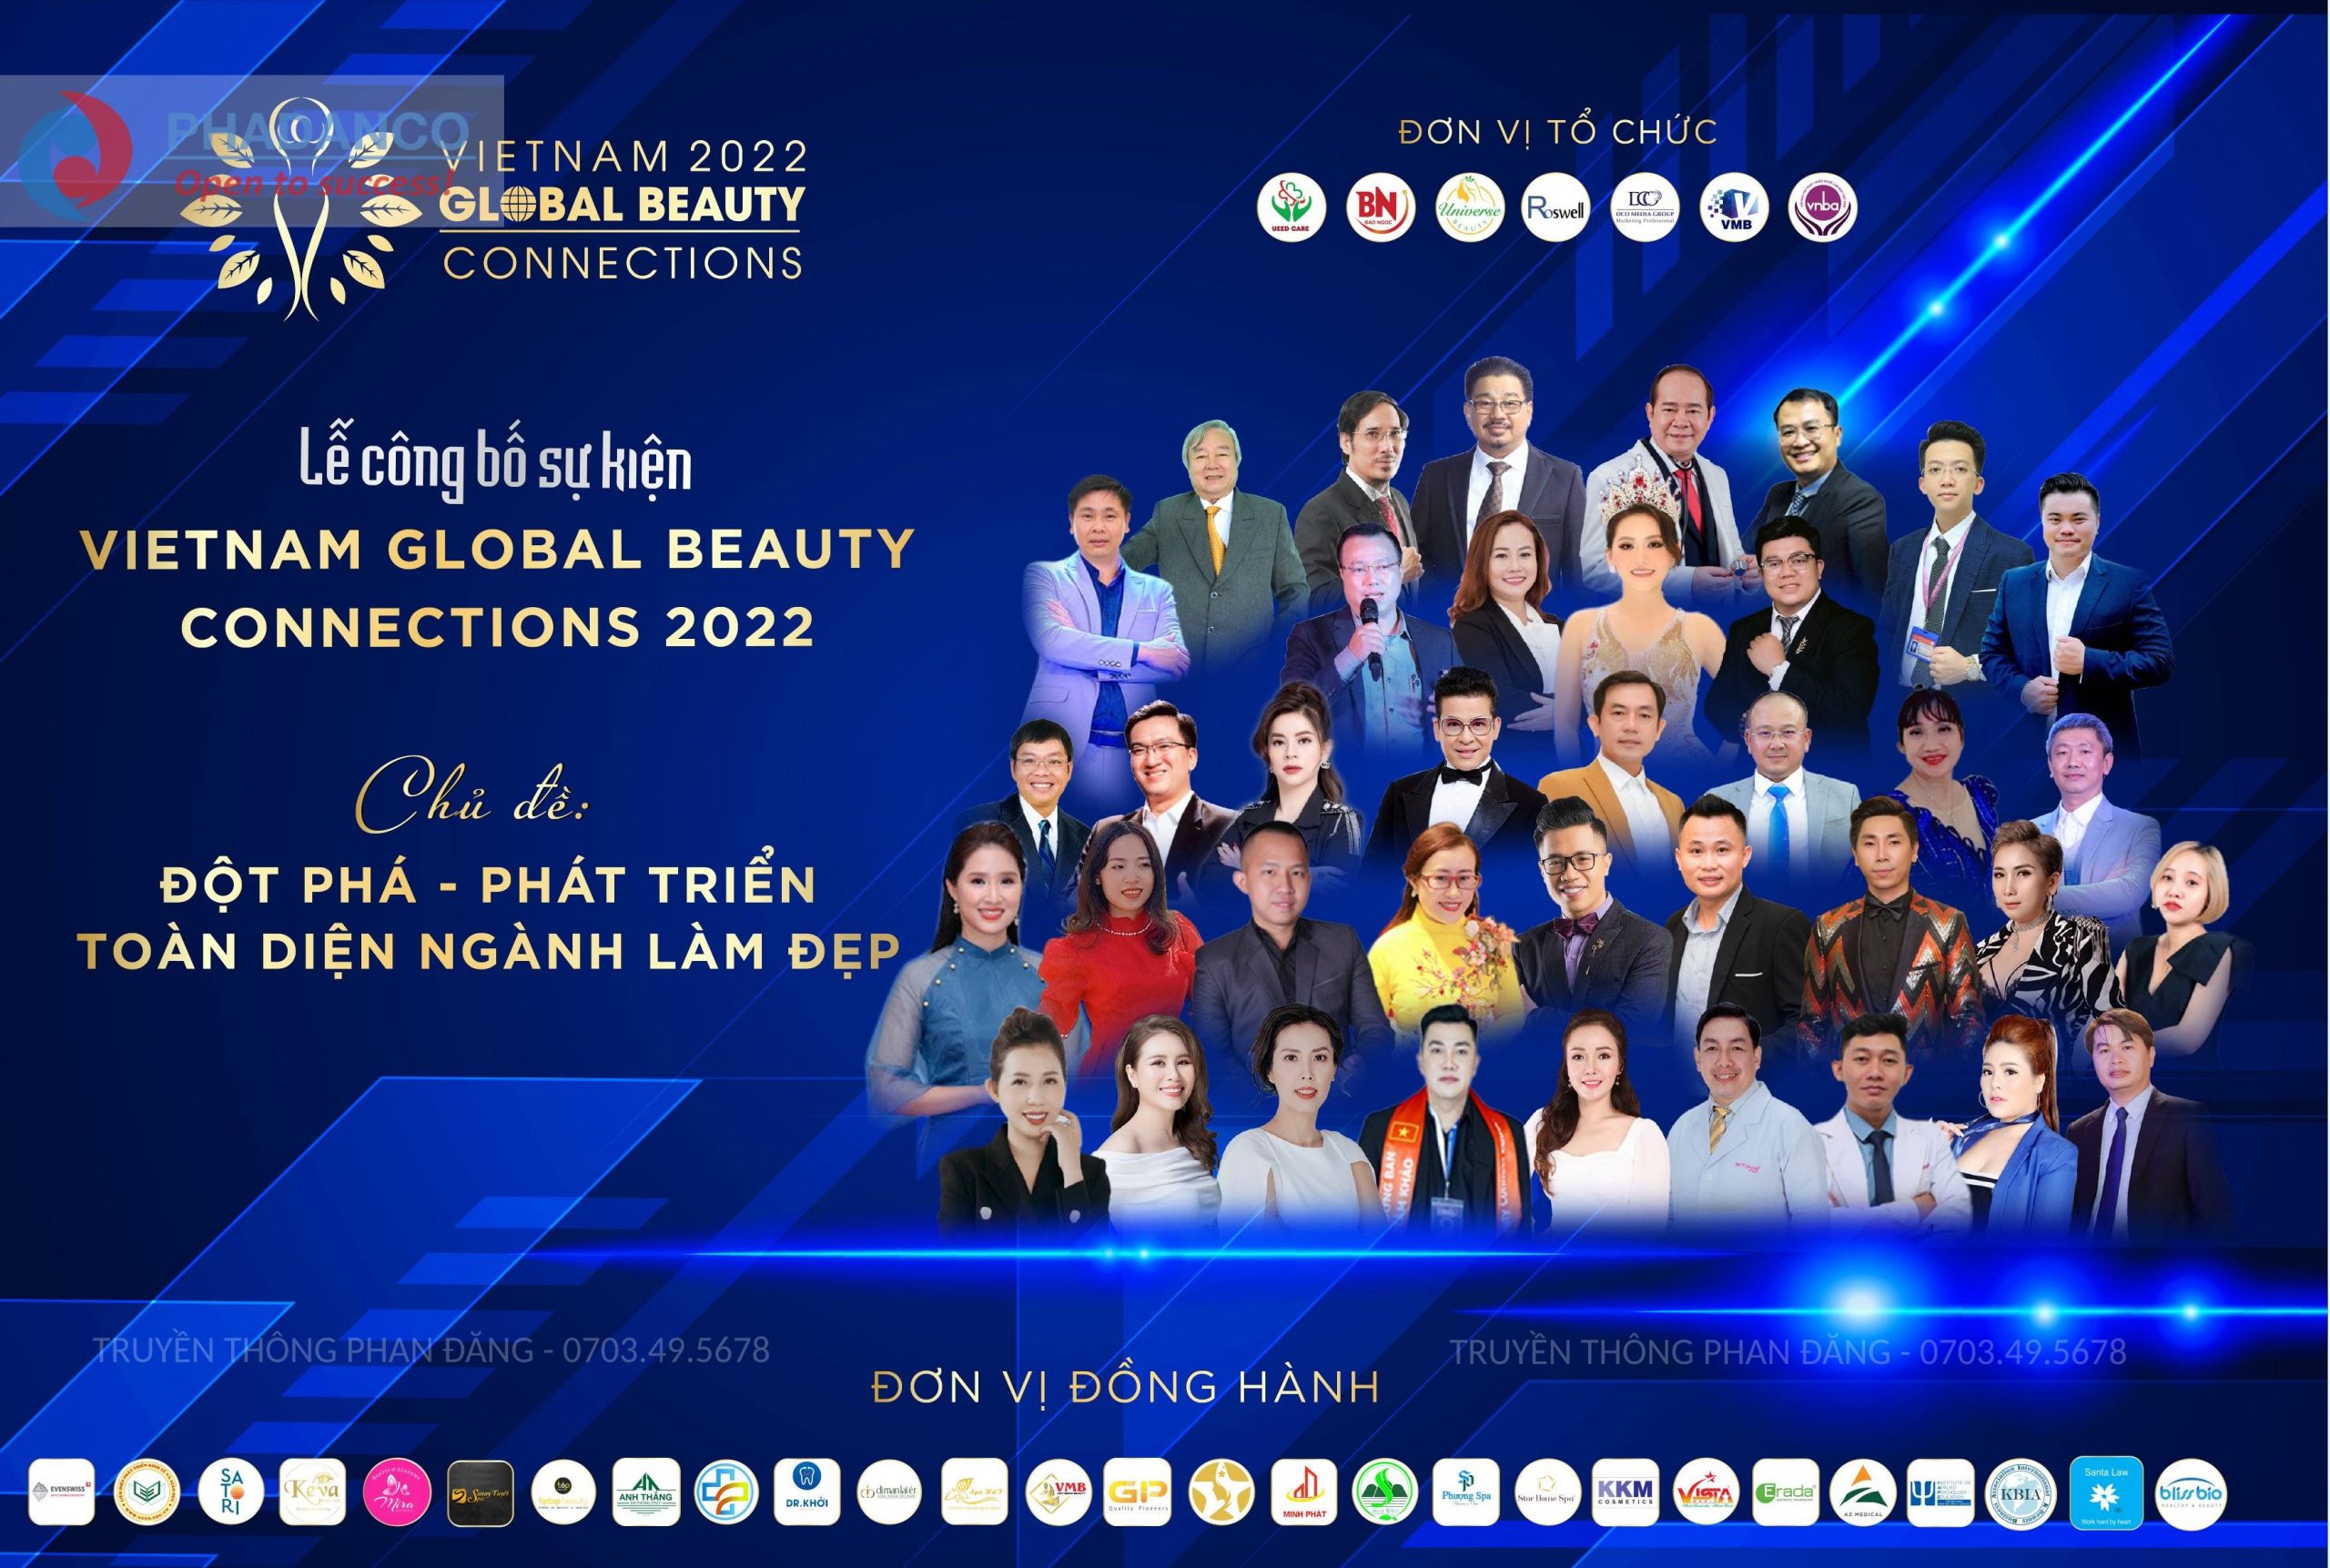 VietNam Global Beauty connection 2022